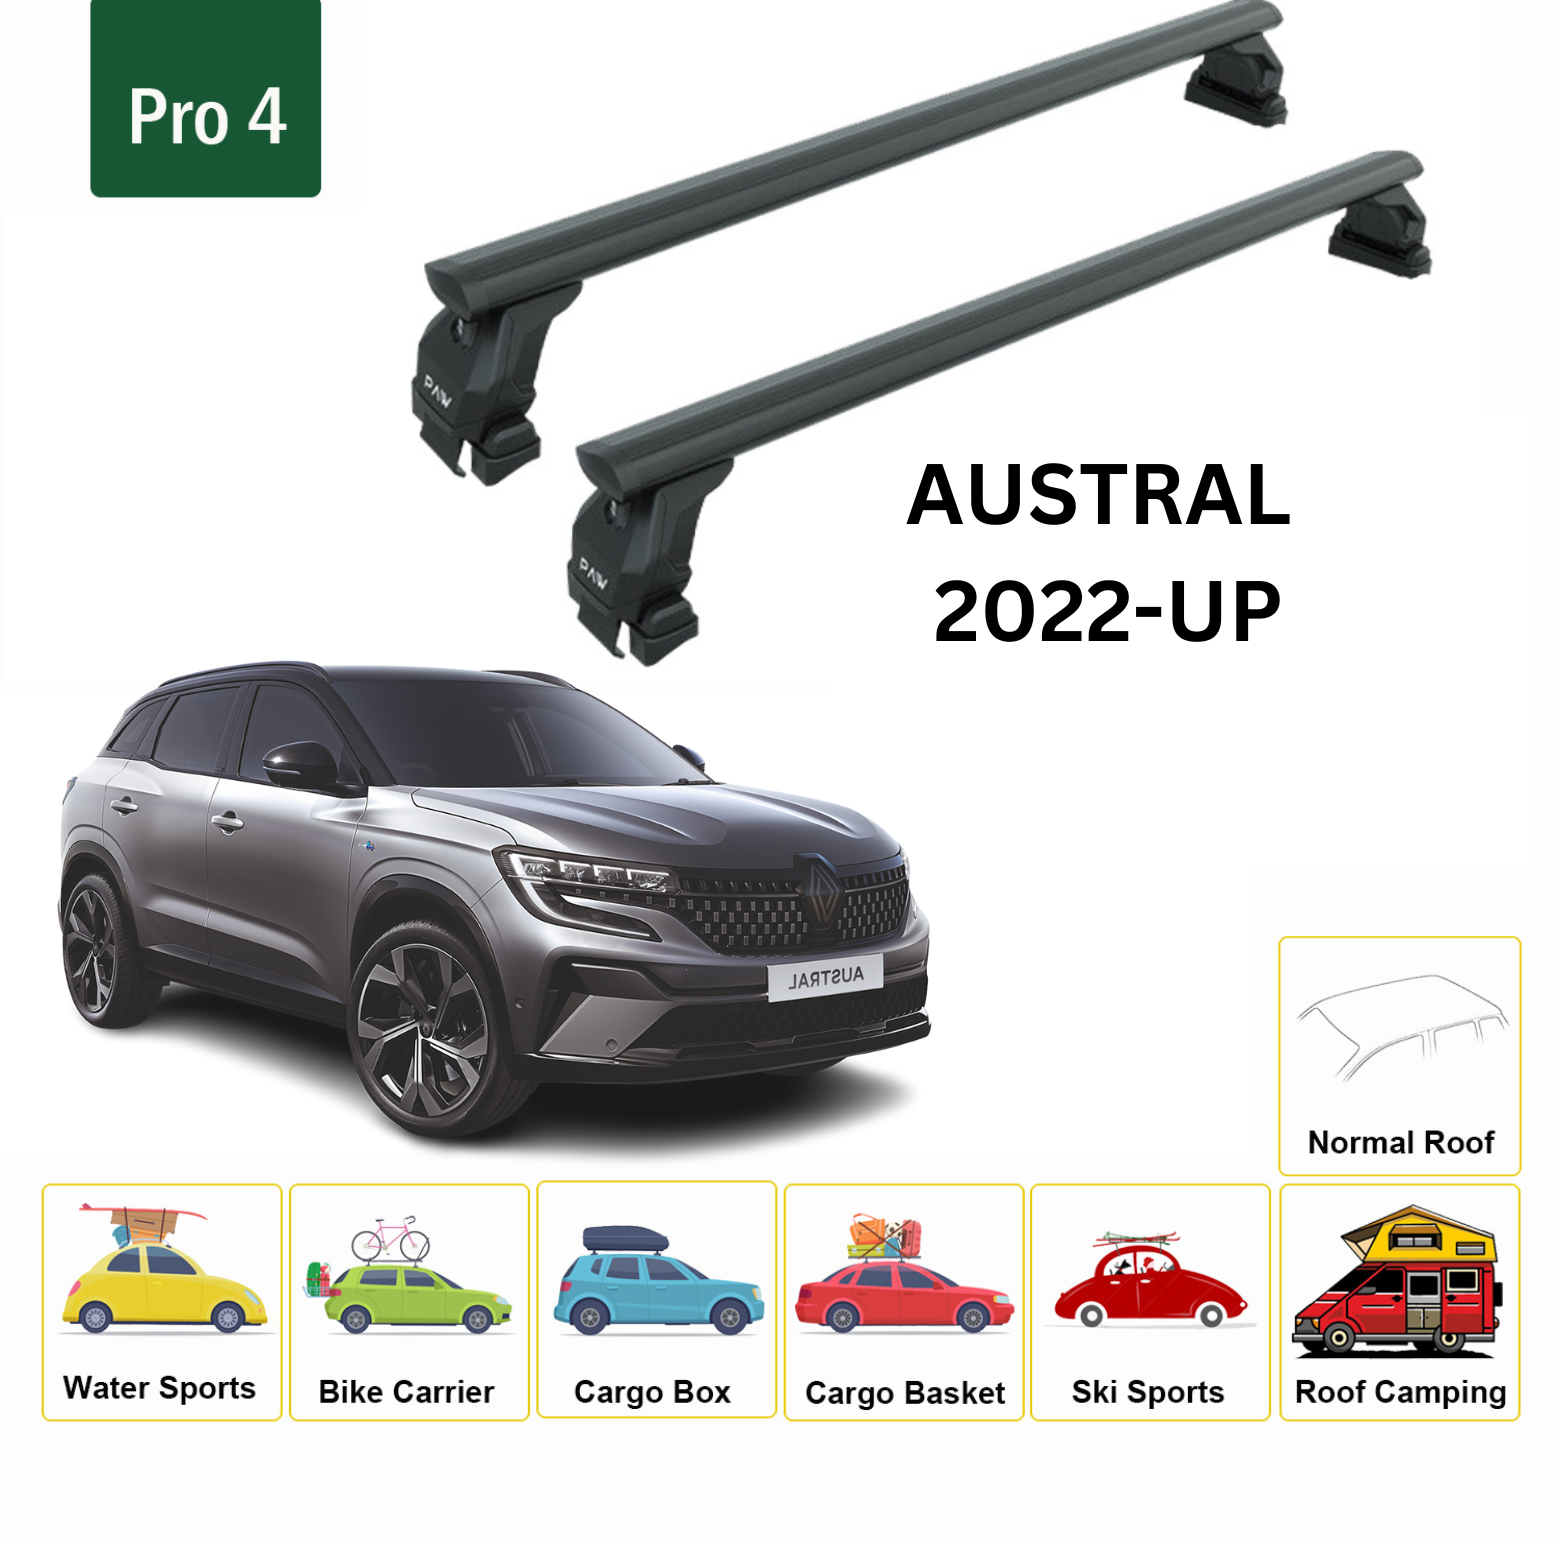 For Renault Austral 2022-Up Roof Rack System, Aluminium Cross Bar, Metal Bracket, Normal Roof, Black